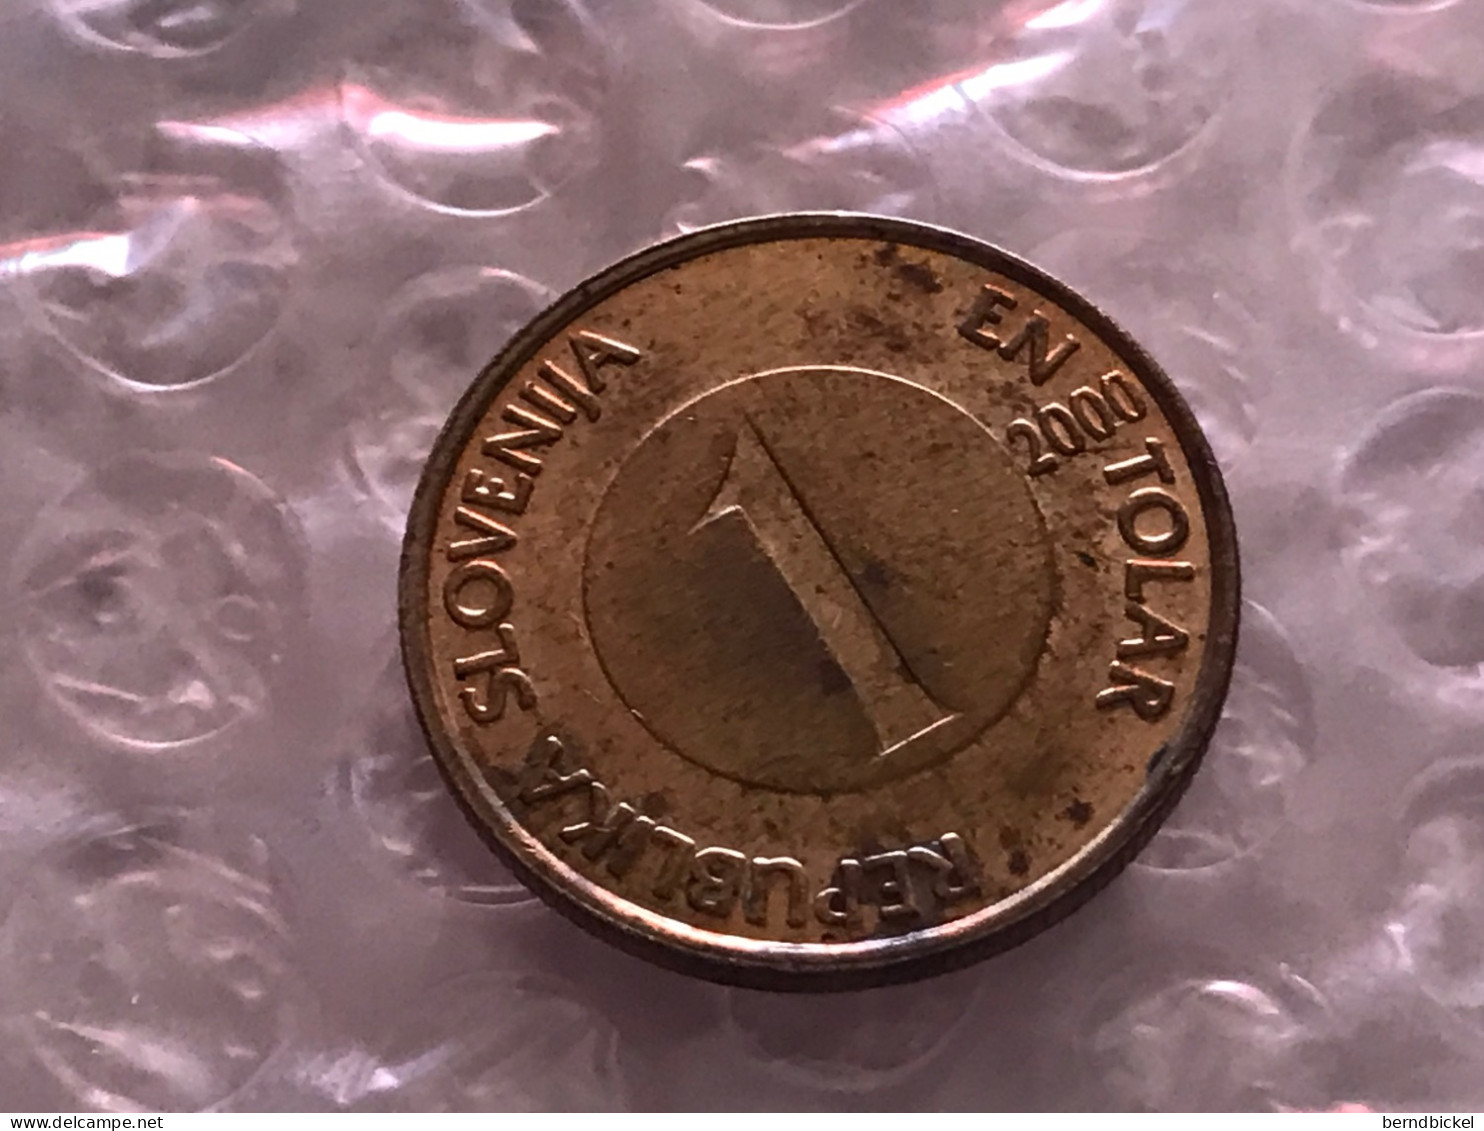 Münze Münzen Umlaufmünze Slowenien 1 Tolar 2000 - Slovenia